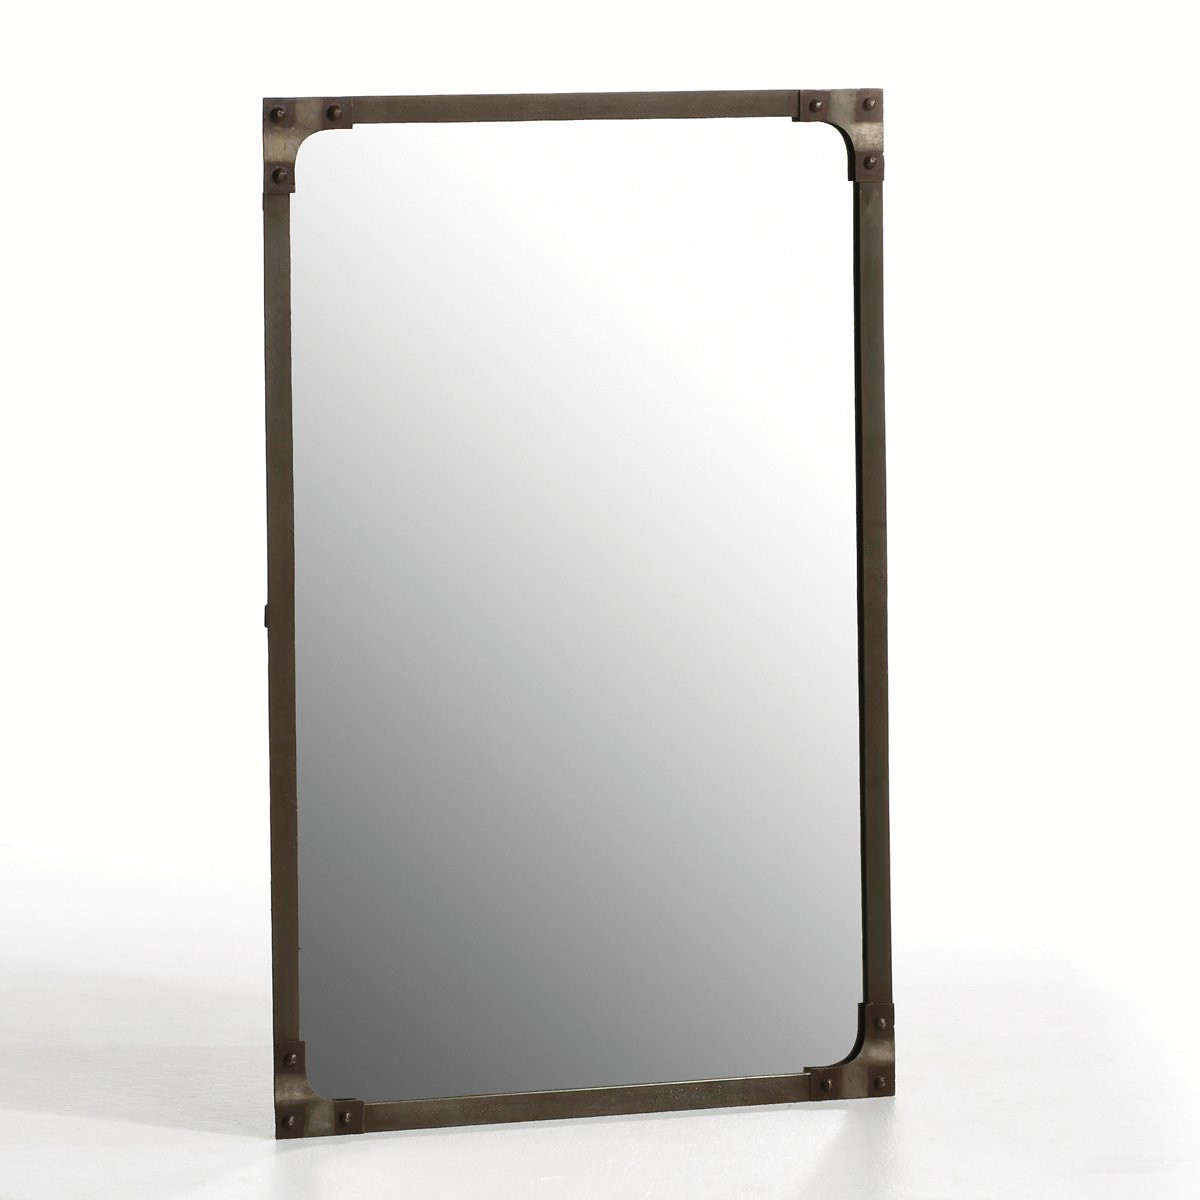 Spiegel Lenaig, rechteckig, Metall, Industrial Style, 60 x 90 cm von LA REDOUTE INTERIEURS